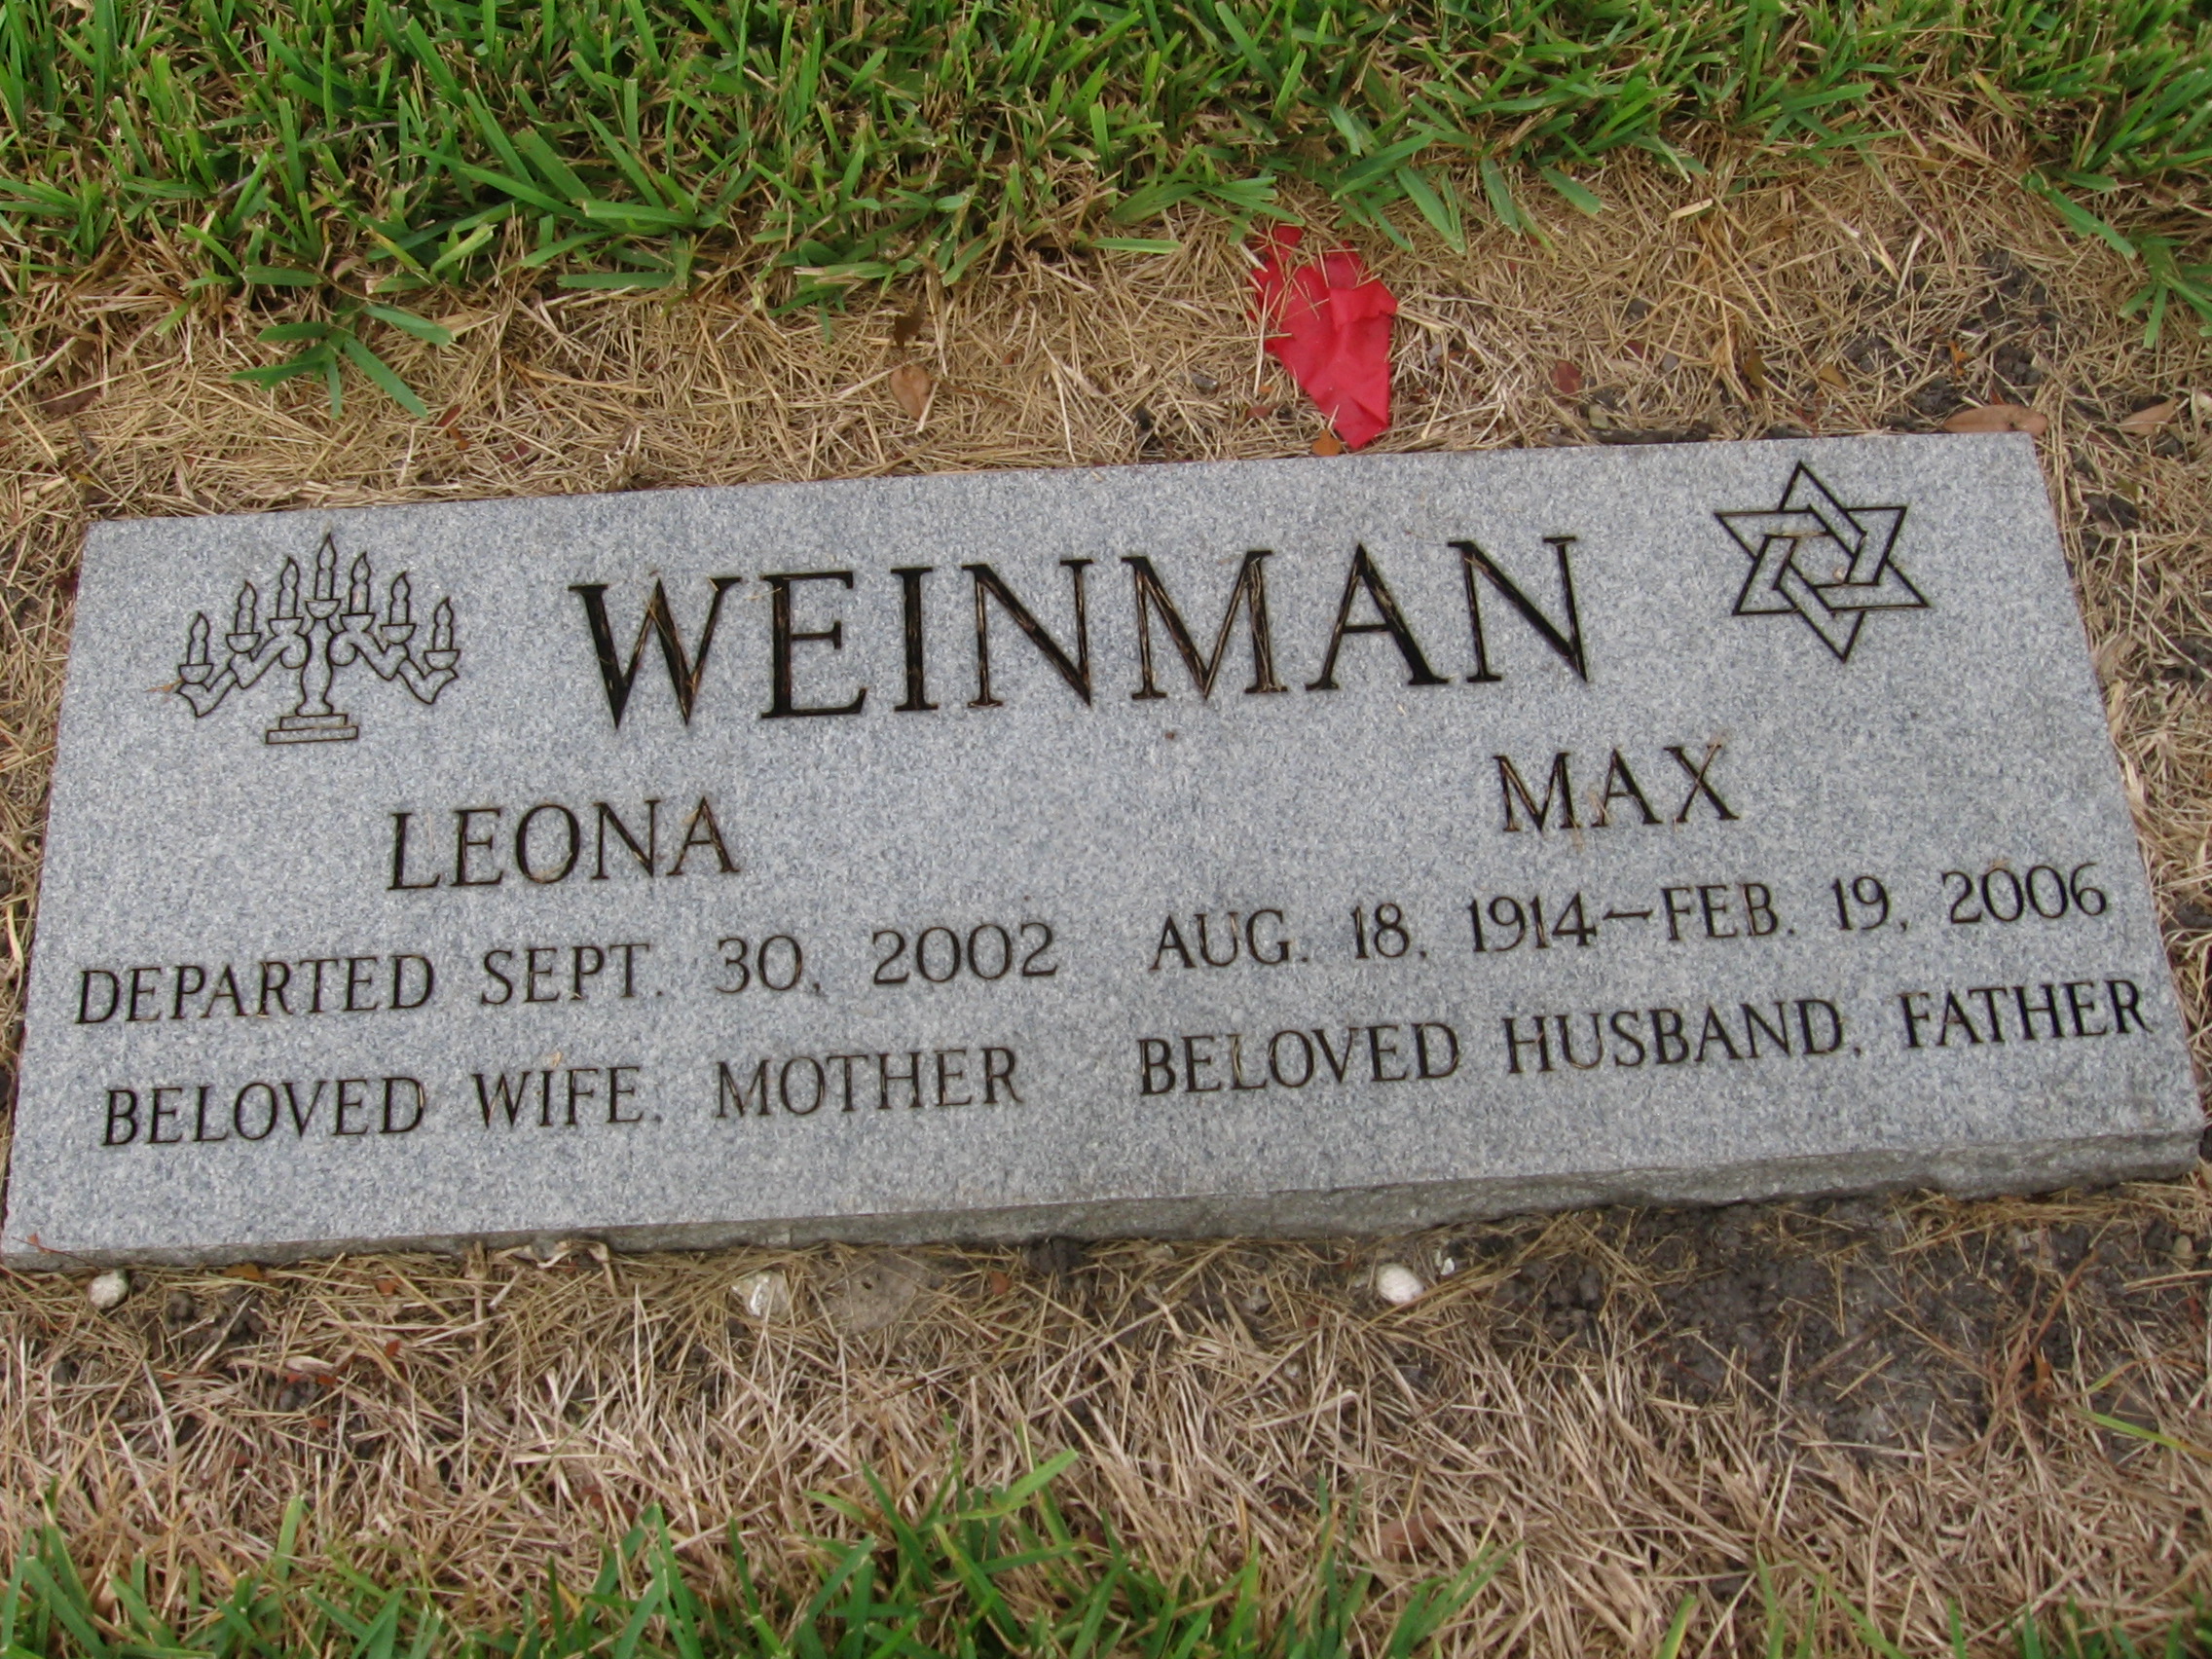 Leona Weinman